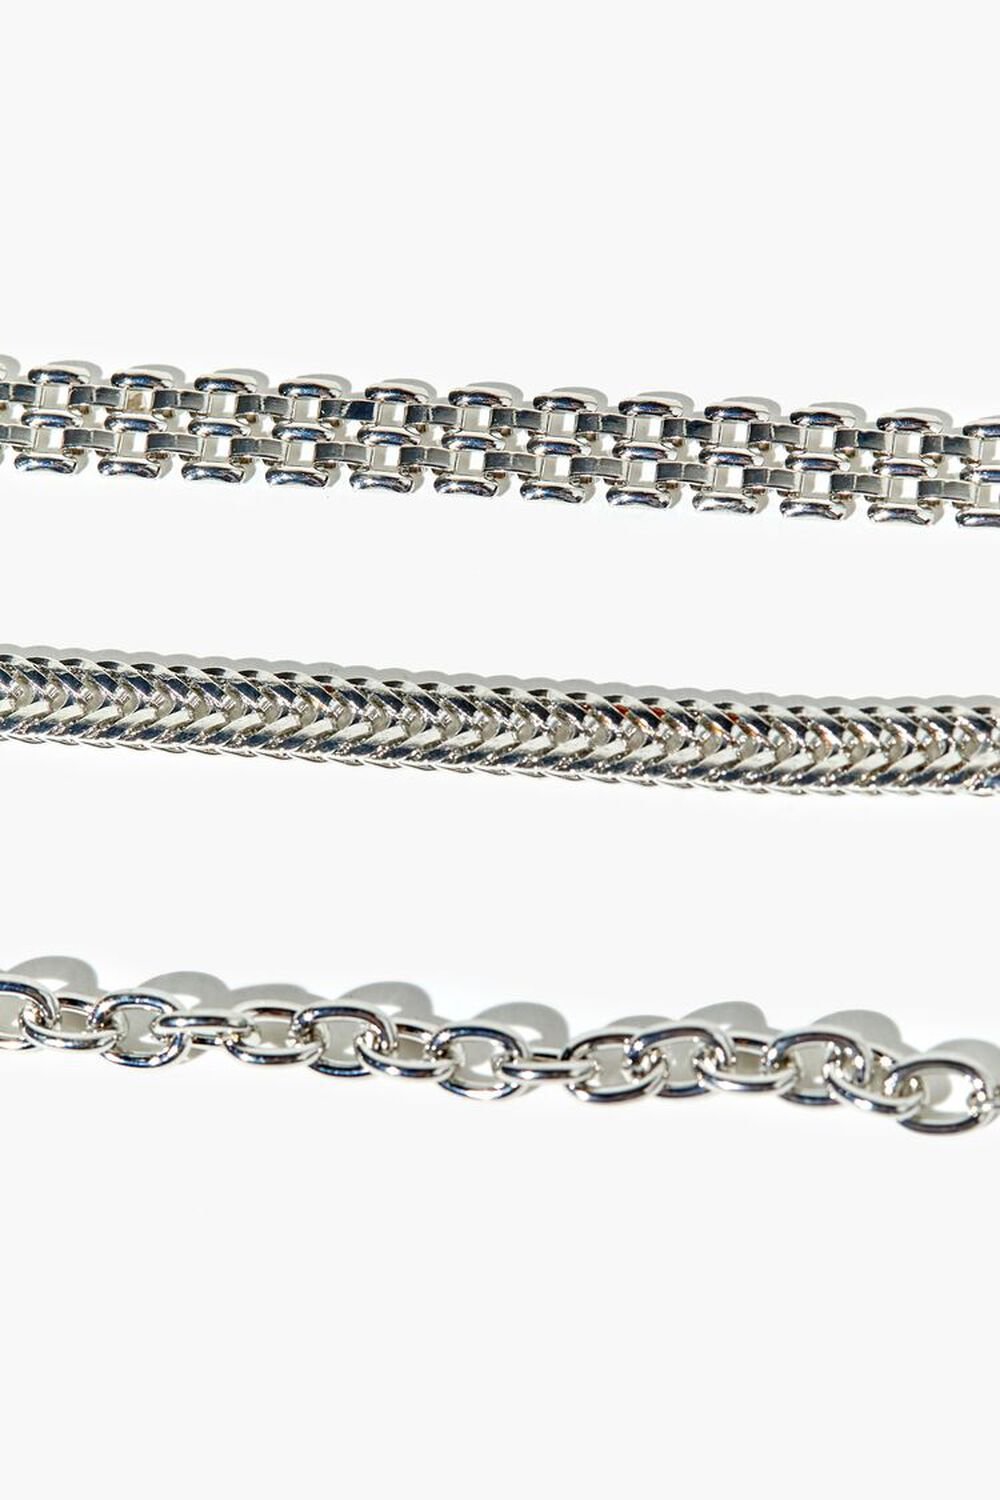 SILVER Chain Bracelet Set, image 1